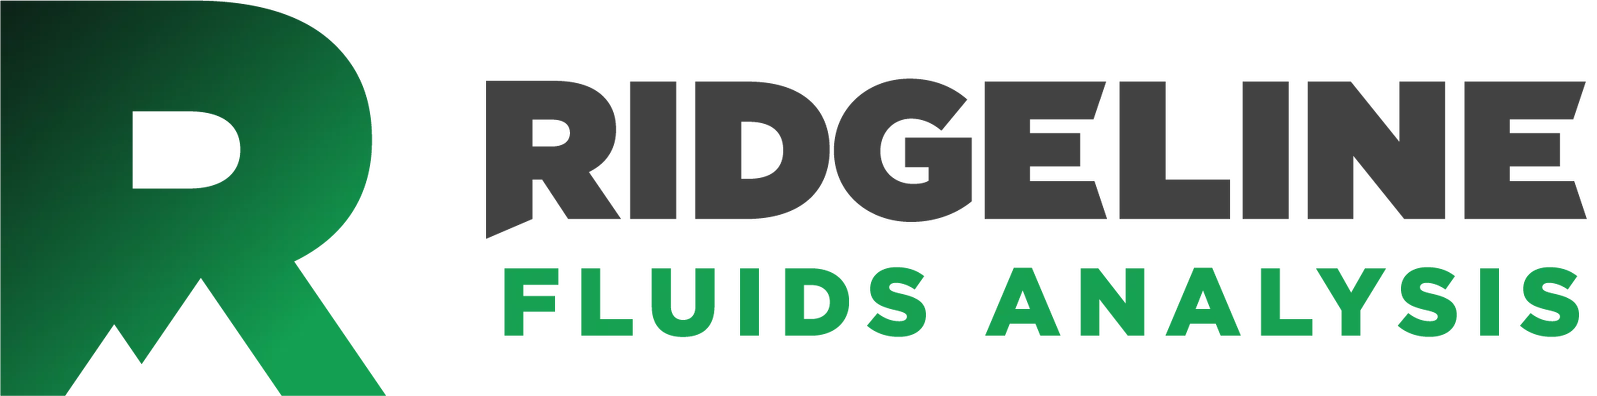  2022/09/Ridgeline-Fluids-Analysis-Horizontal-Logo.png 